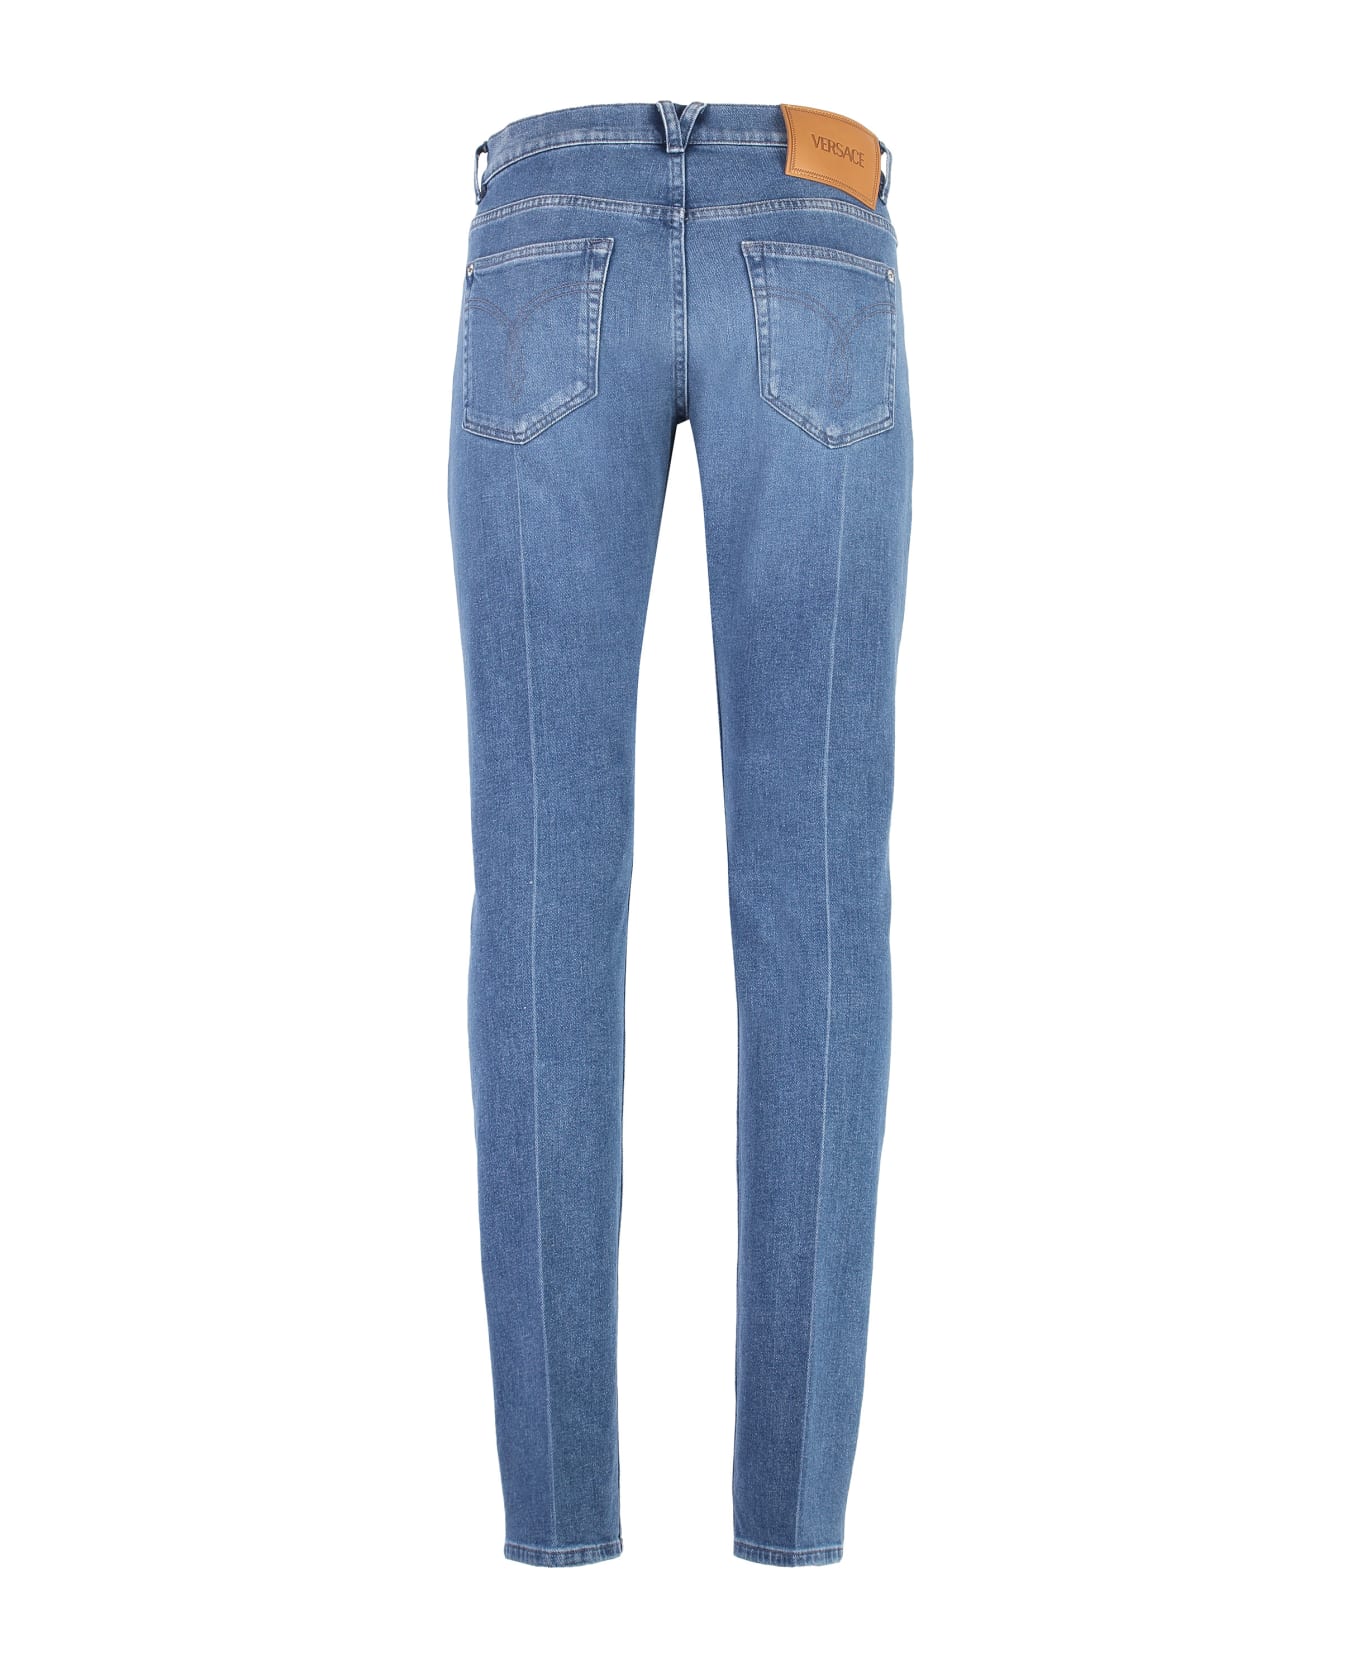 Versace 5-pocket Slim Fit Jeans - Denim